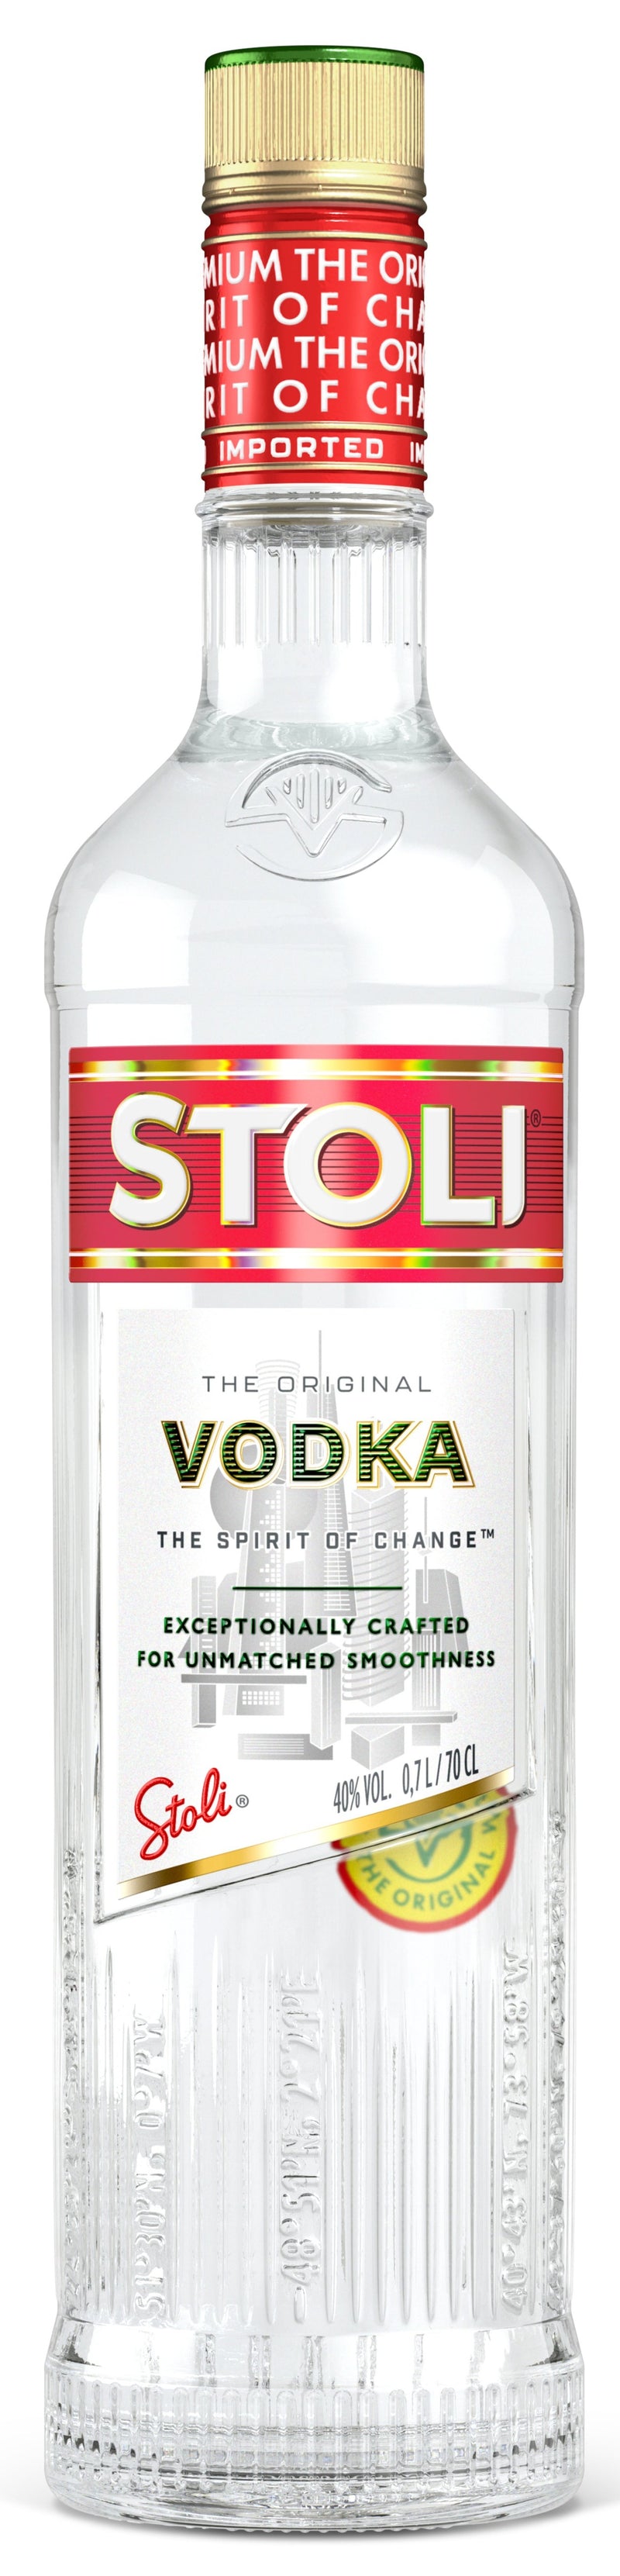 Stolichnaya Red Label Vodka 70cl